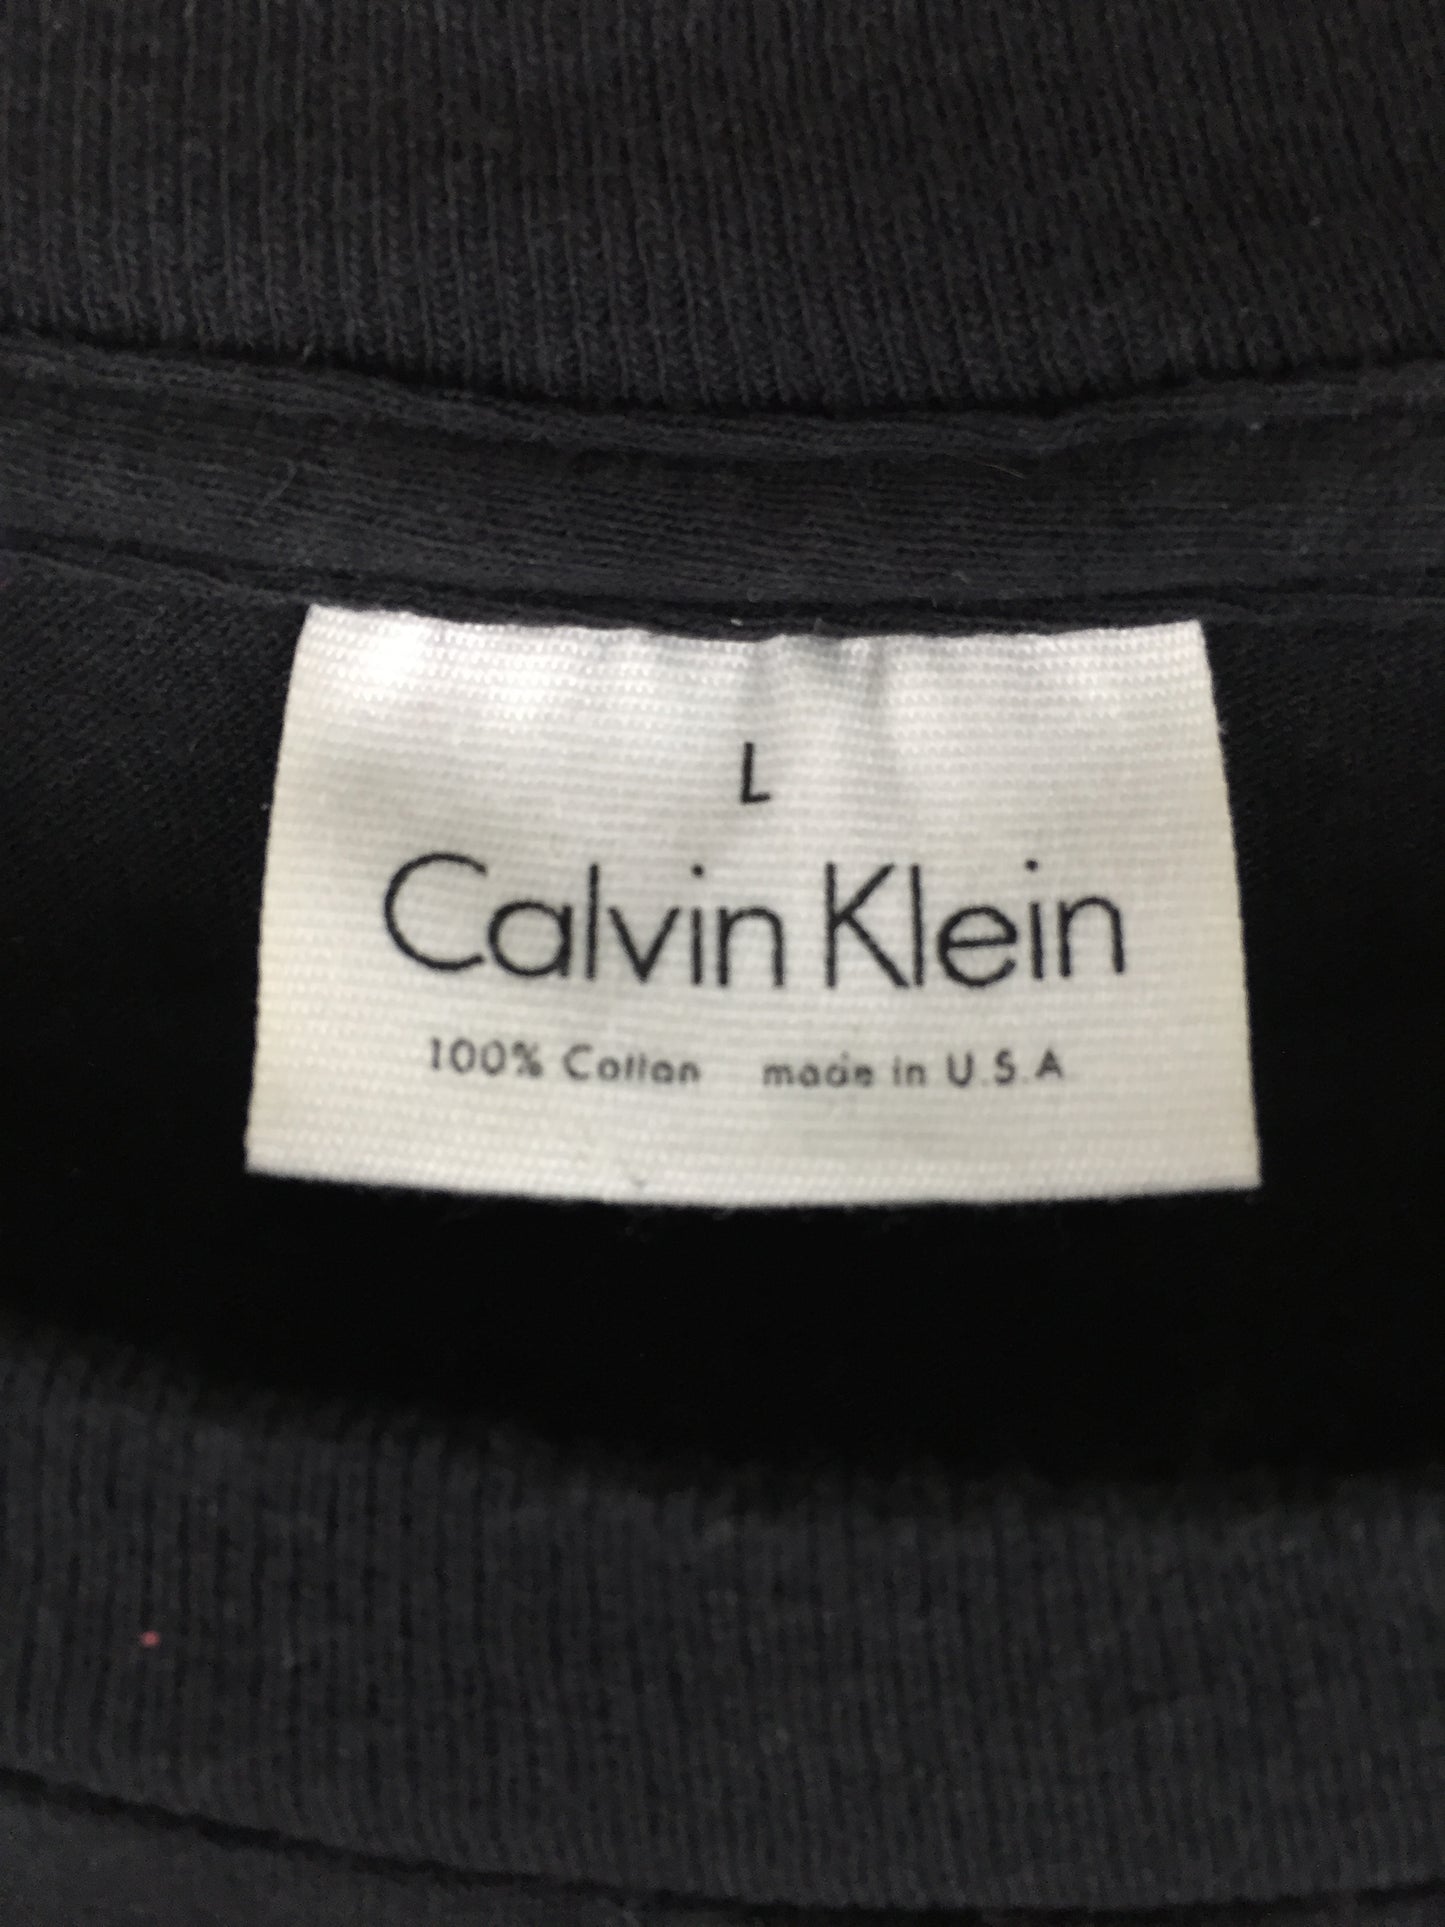 Vintage Calvin Klein Spellouts logo 90's made in USA Tshirt